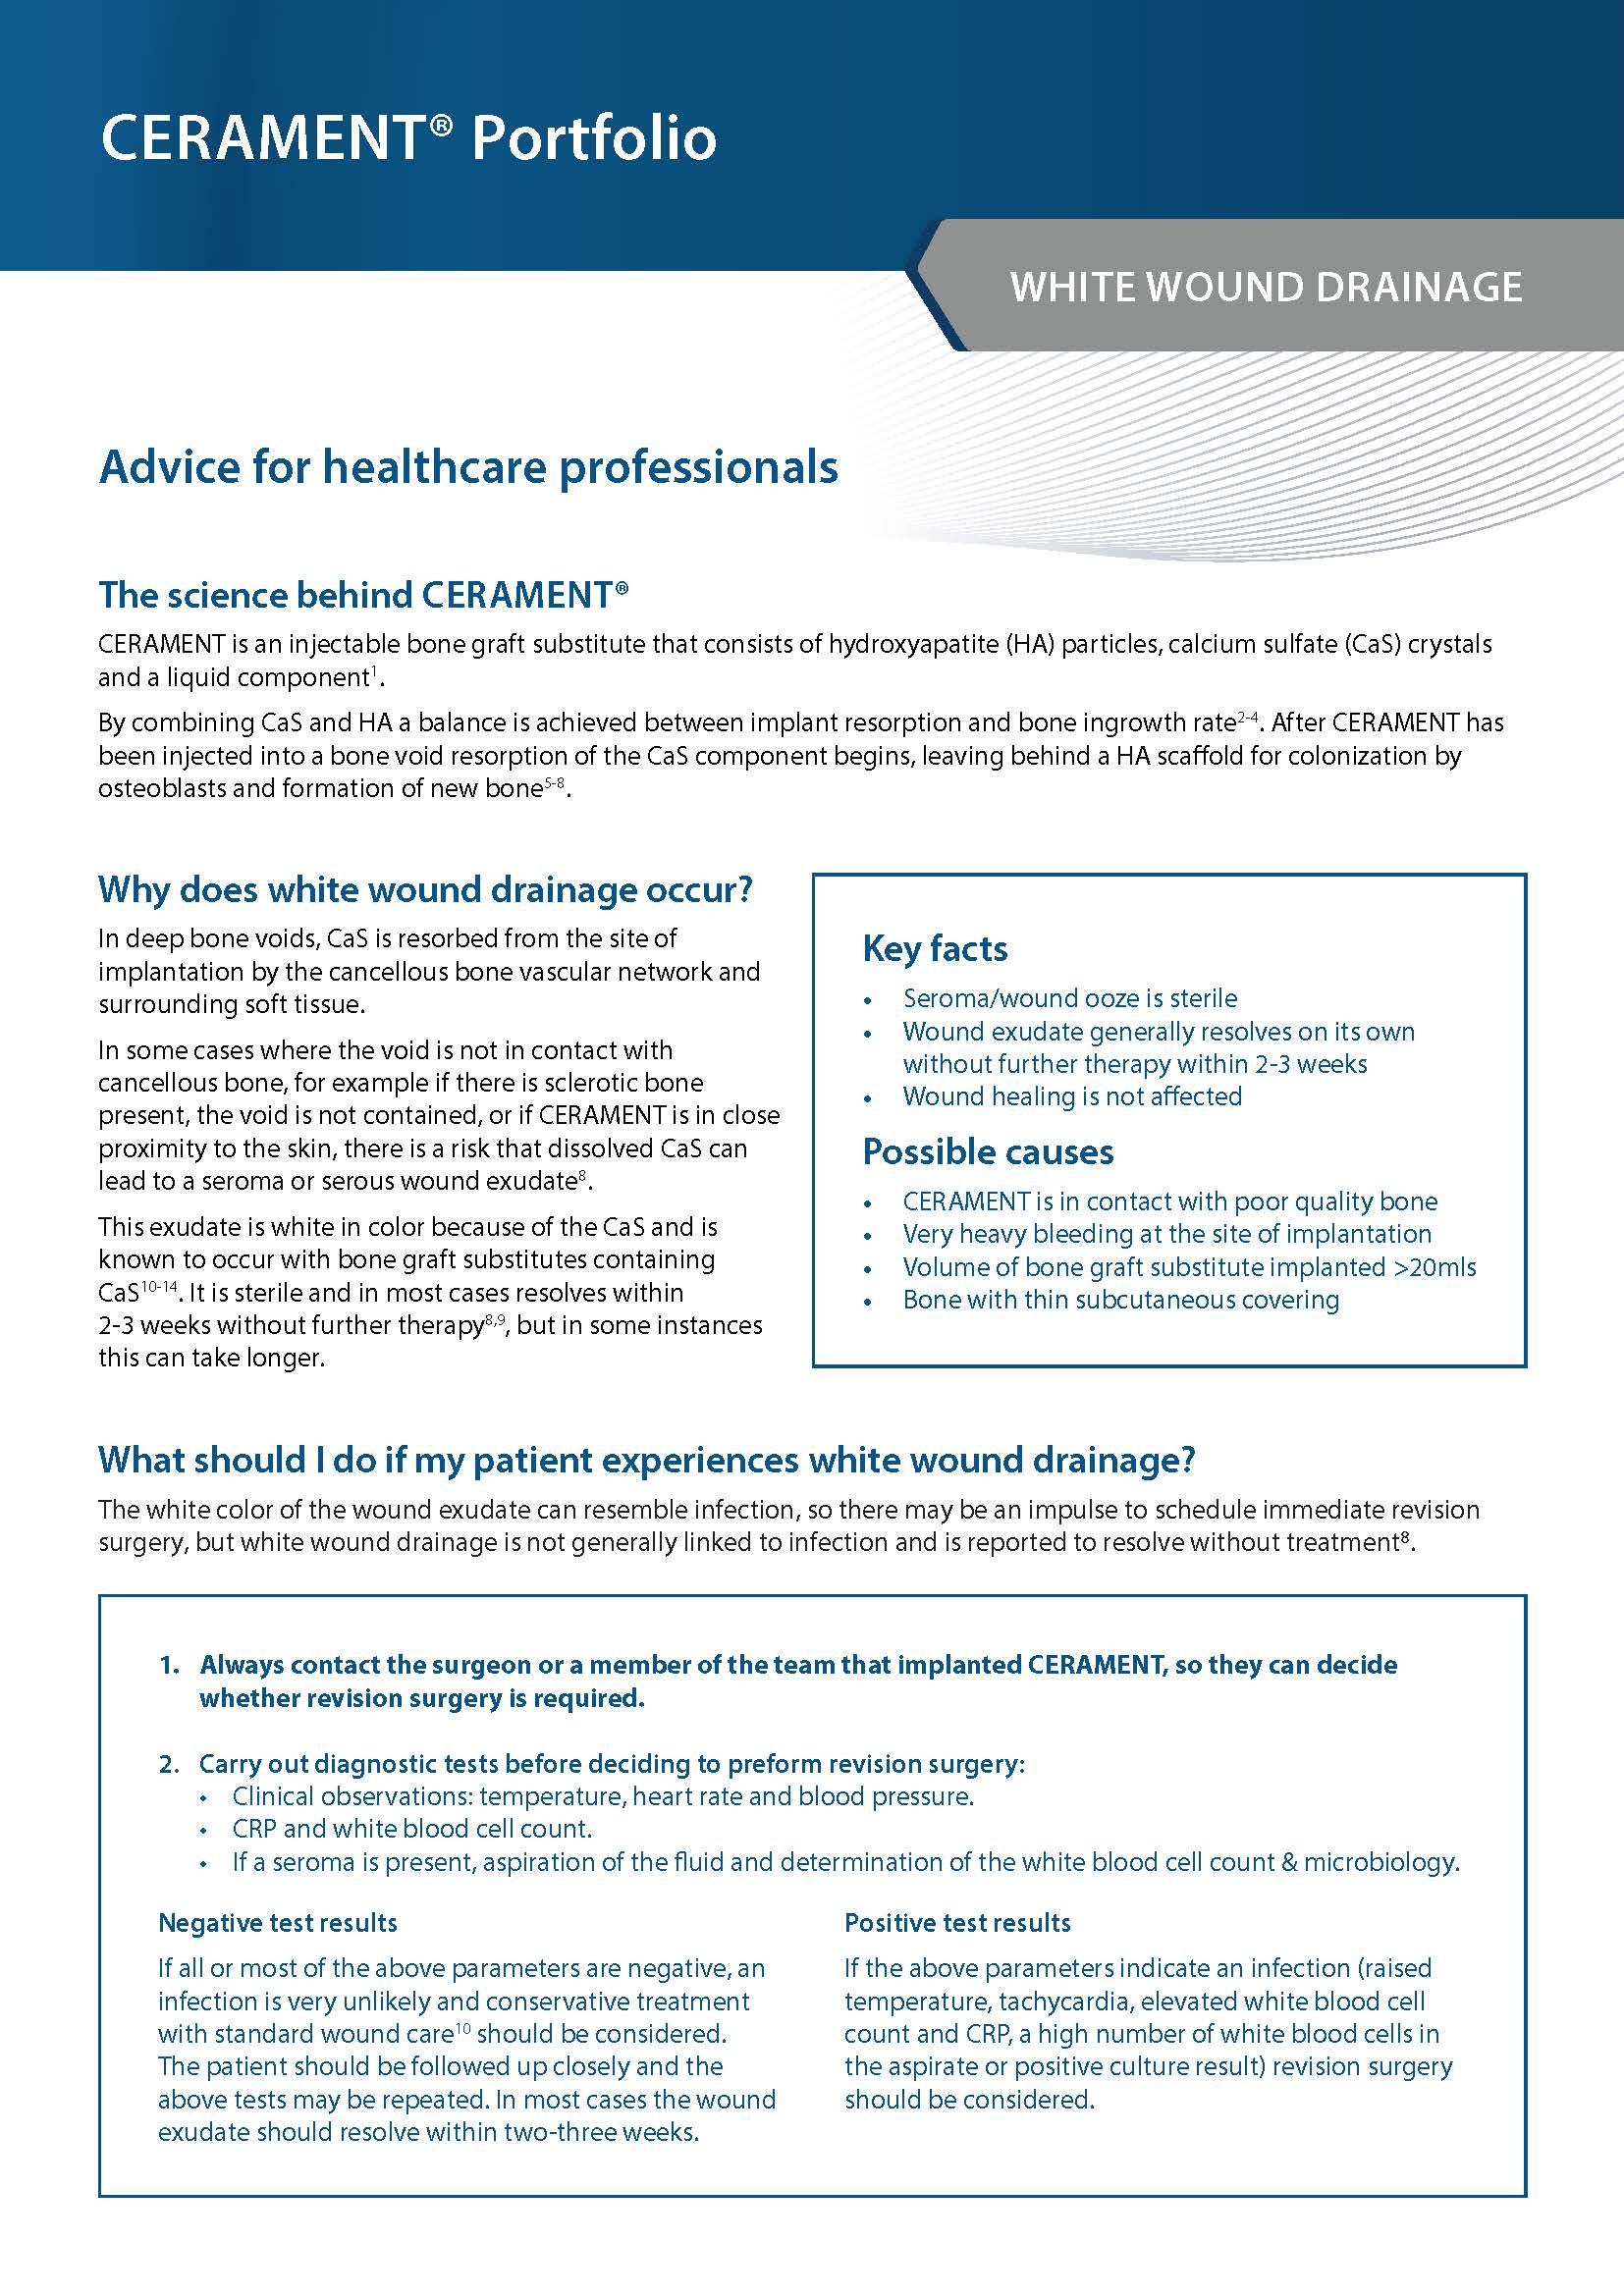 White wound drainage advice brochure